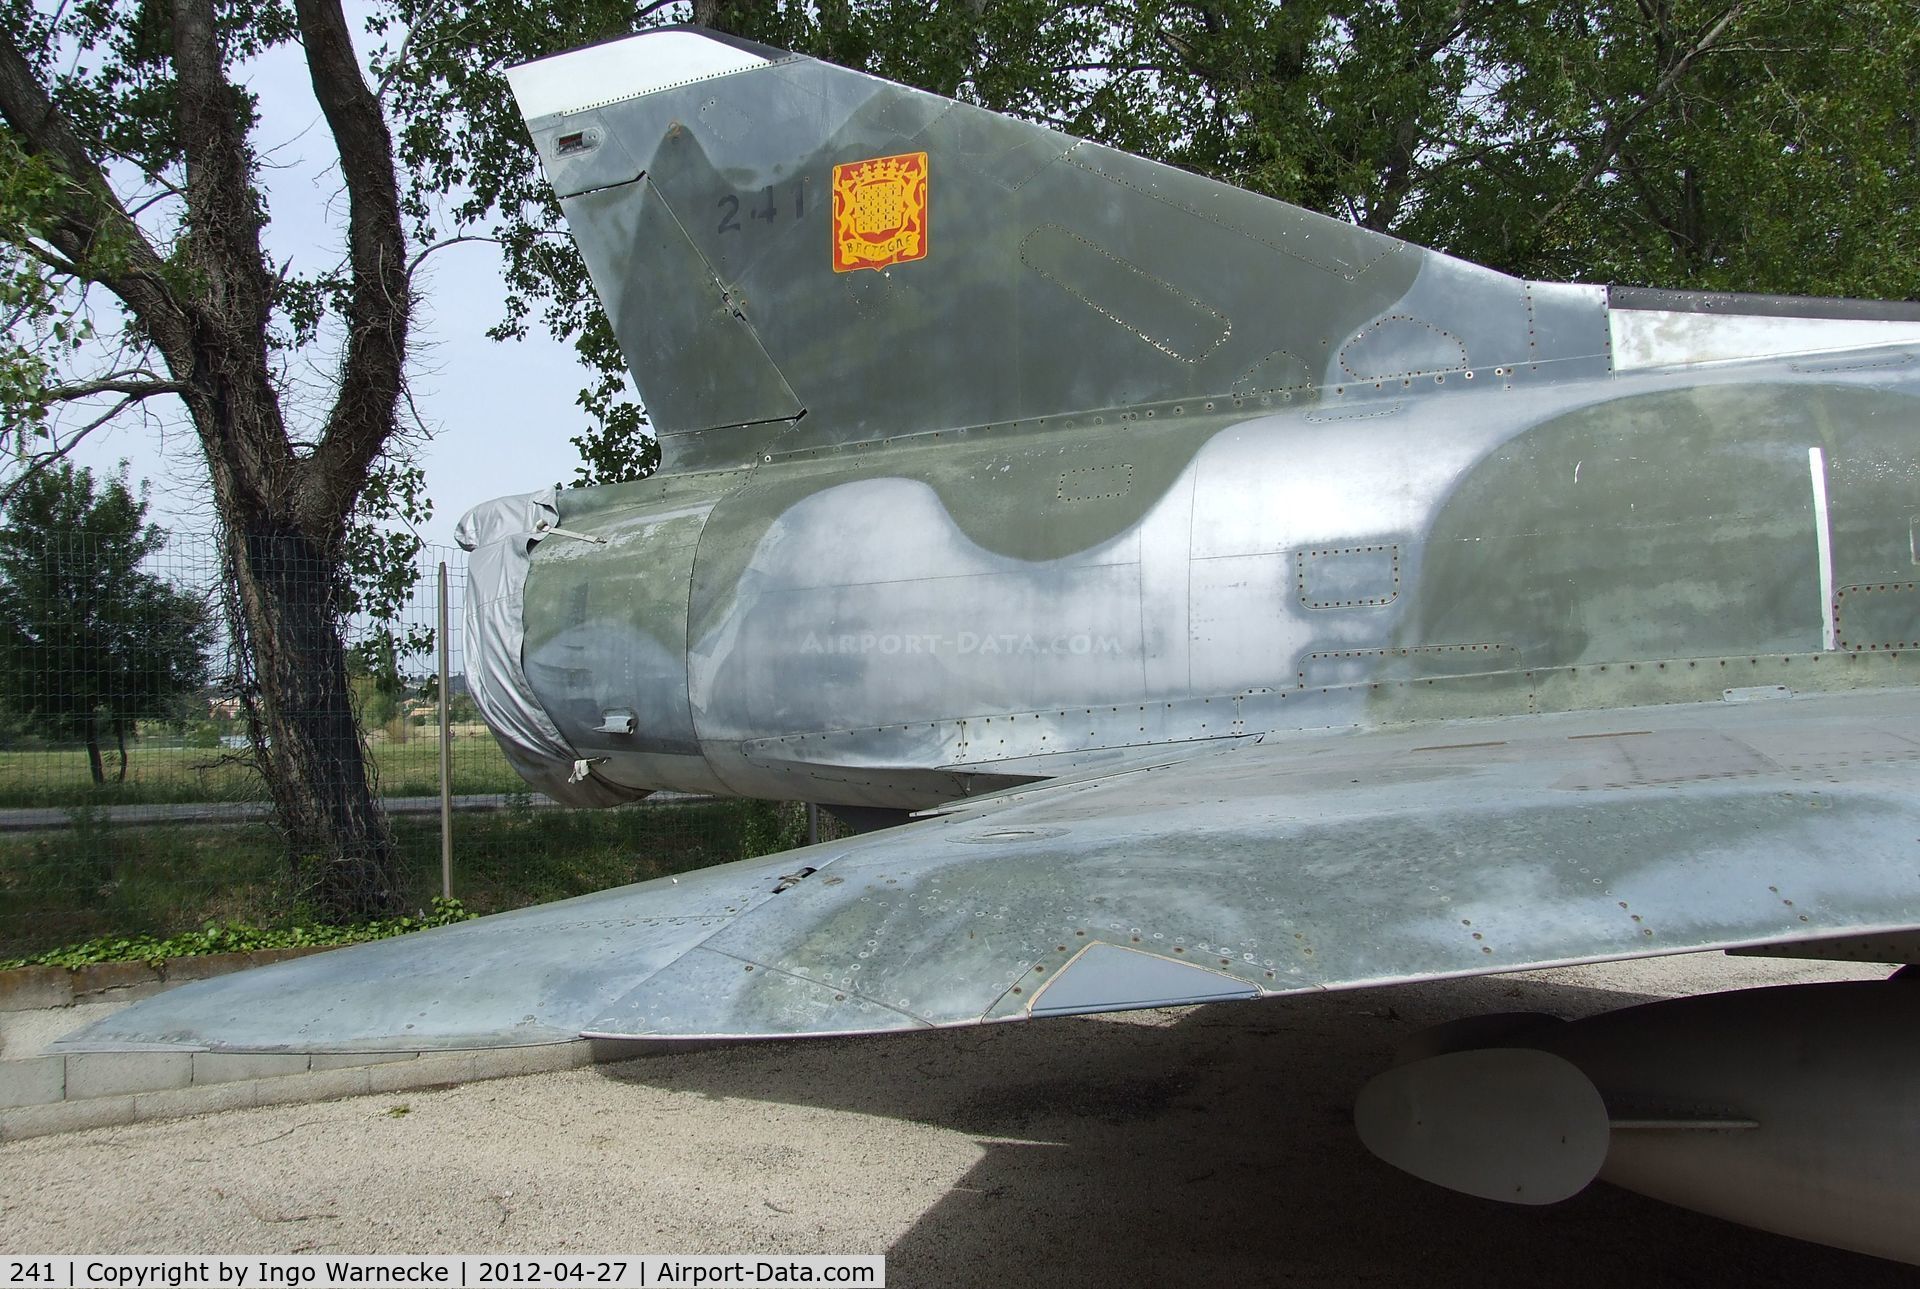 241, Dassault Mirage IIIB-RV C/N 241, Dassault Mirage III B-RV at the Musee Aeronautique, Orange